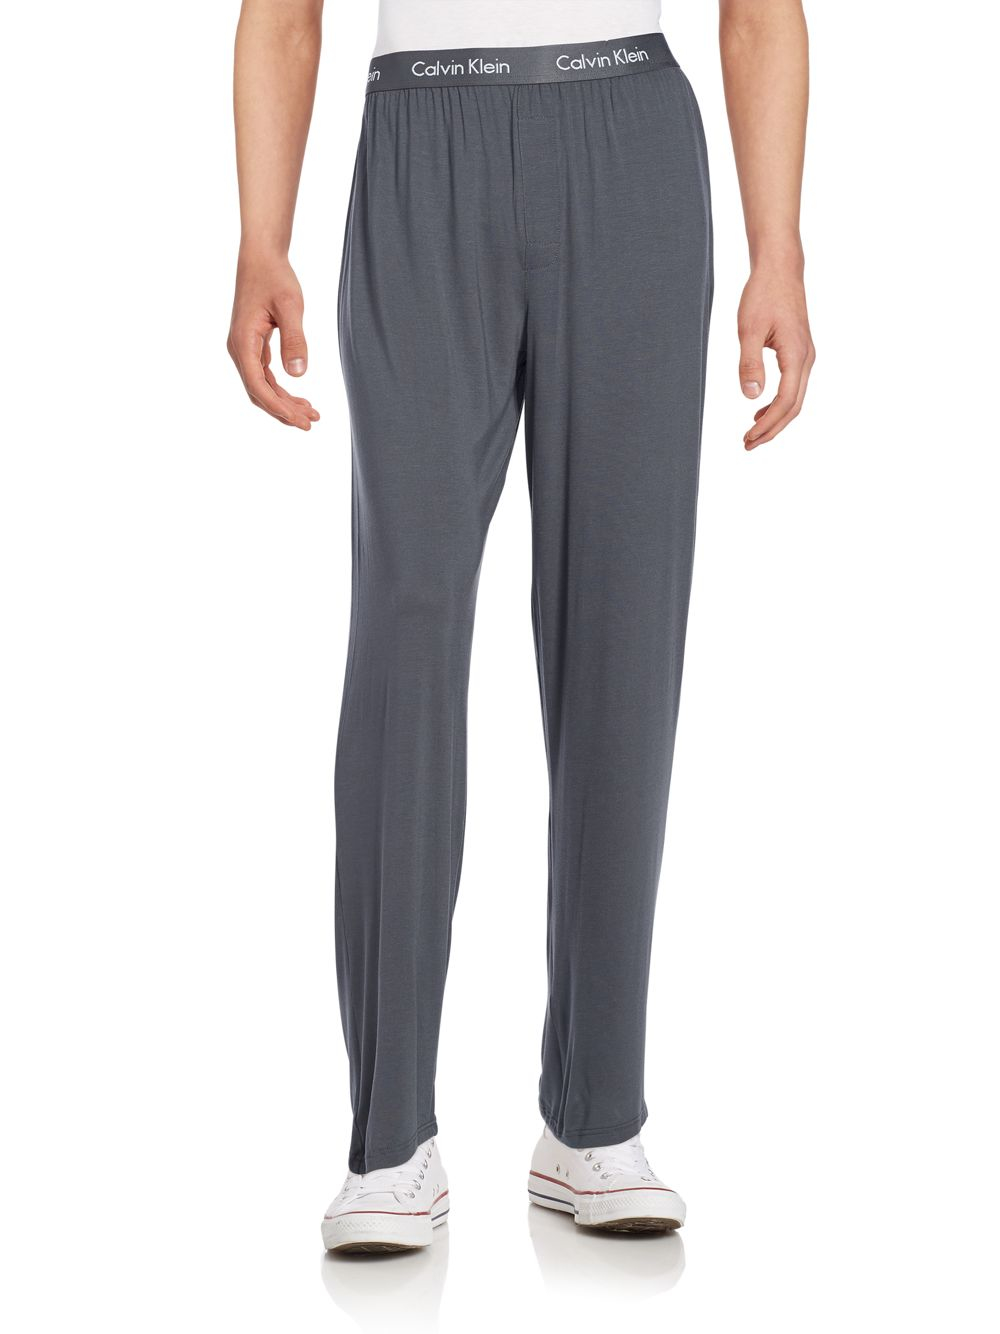 Calvin klein Logo Lounge Pants in Gray for Men | Lyst